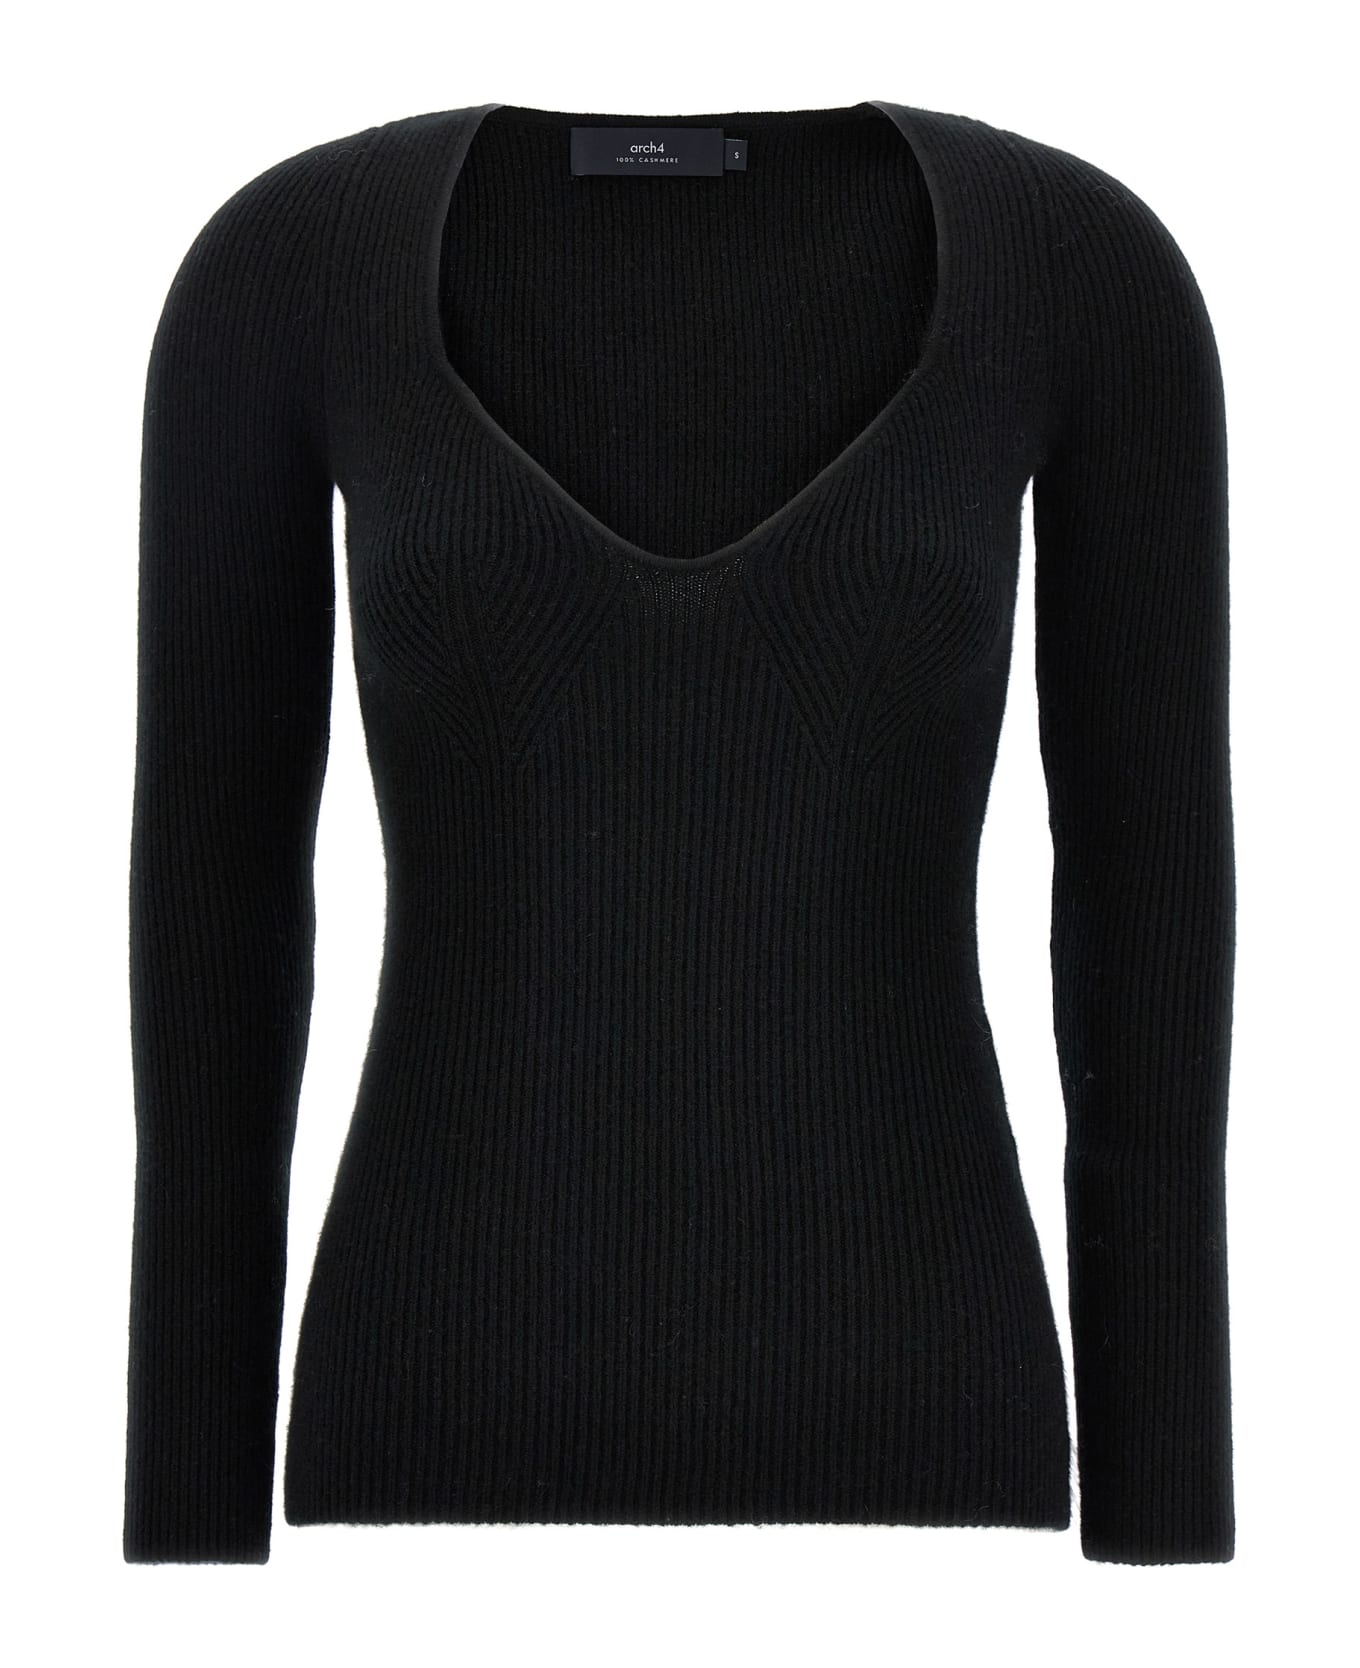 arch4 'amirah' Sweater - Black  